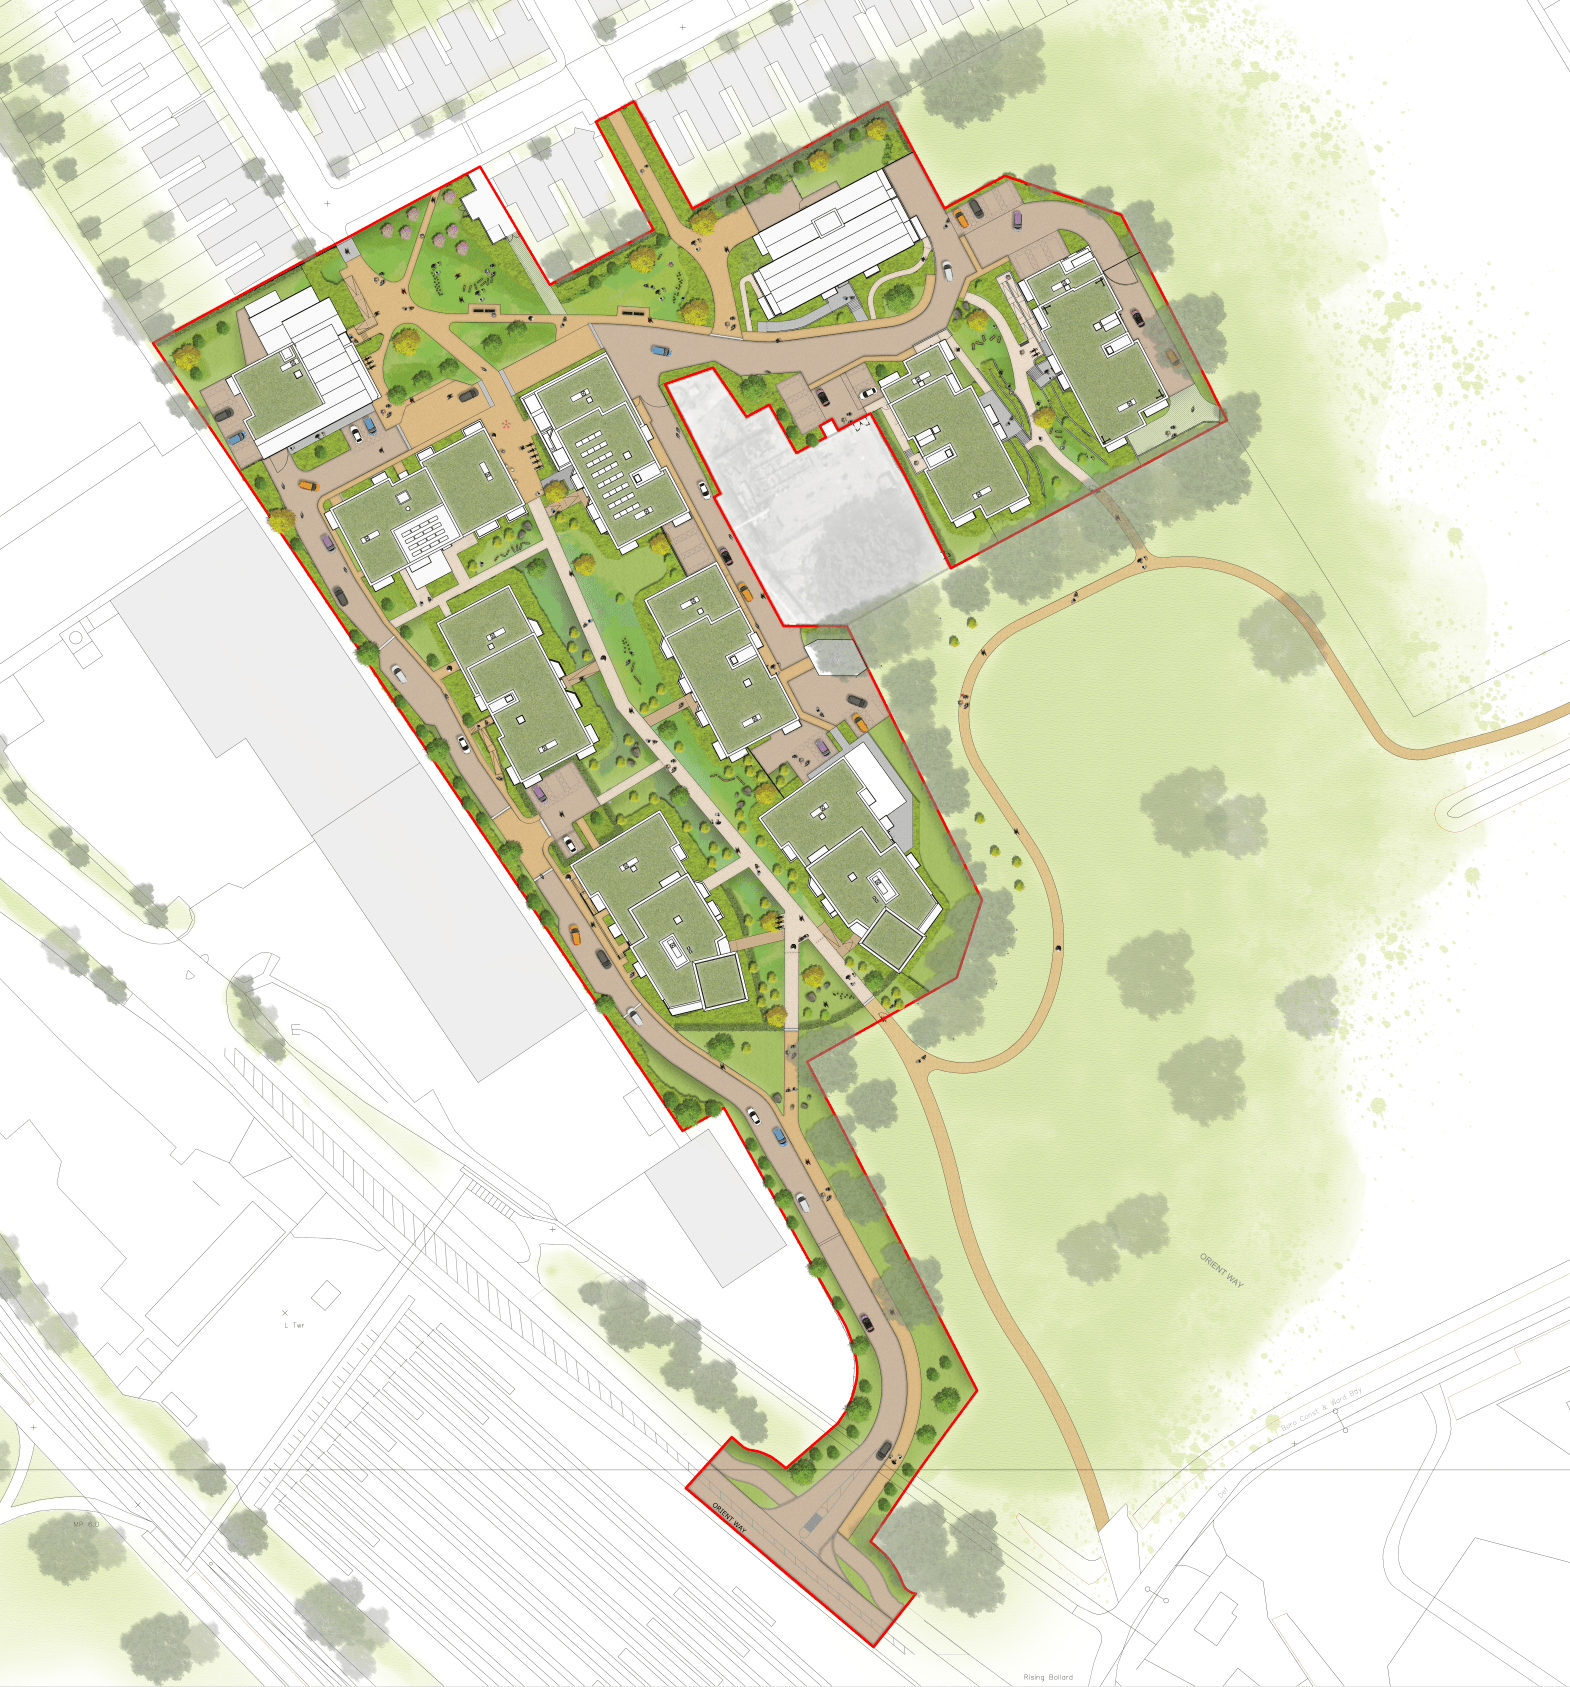 An illustrative masterplan showing the proposed development at Lea Bridge Gasworks. © BMD